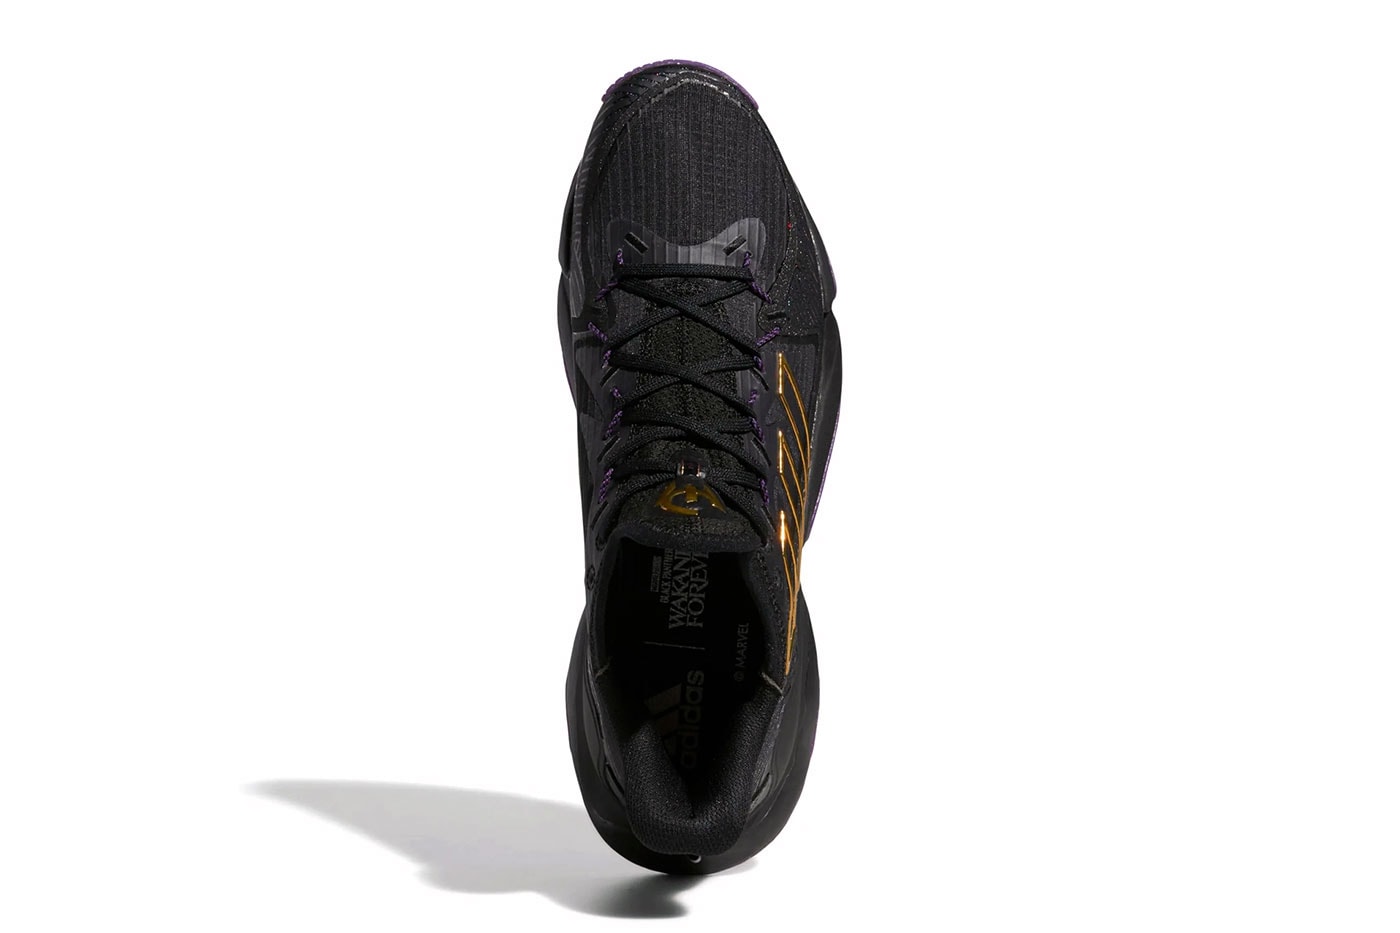 adidas impact FLX black purple septemeber 30 140 USD gx9654 black panther patrick mahomes release info date price